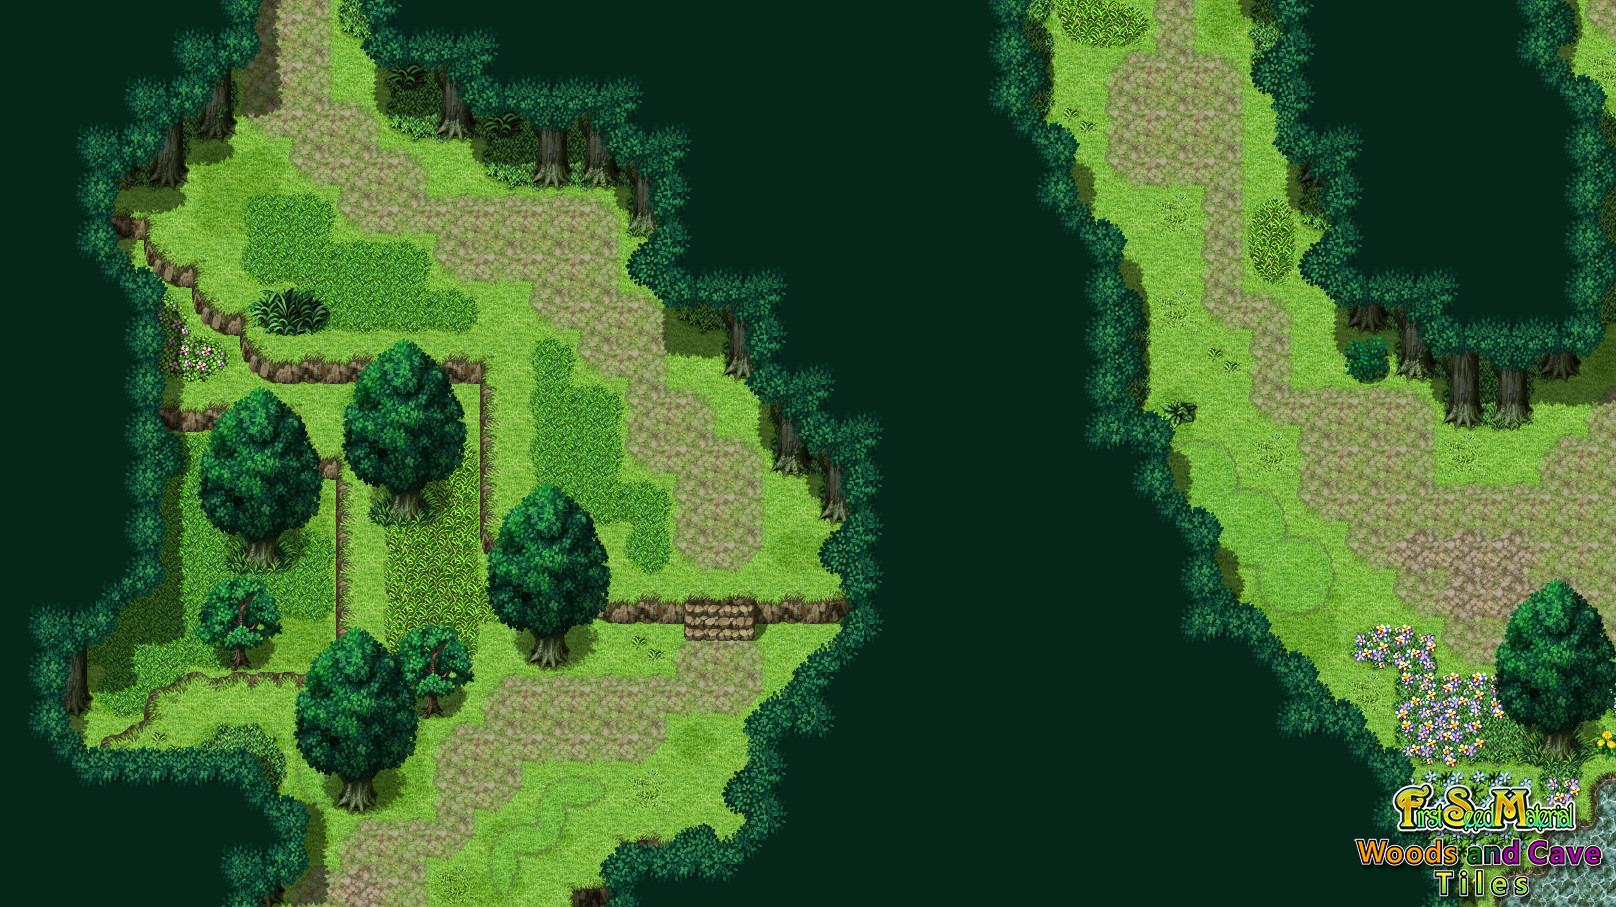 RPG Maker MV - FSM: Woods and Cave screenshot